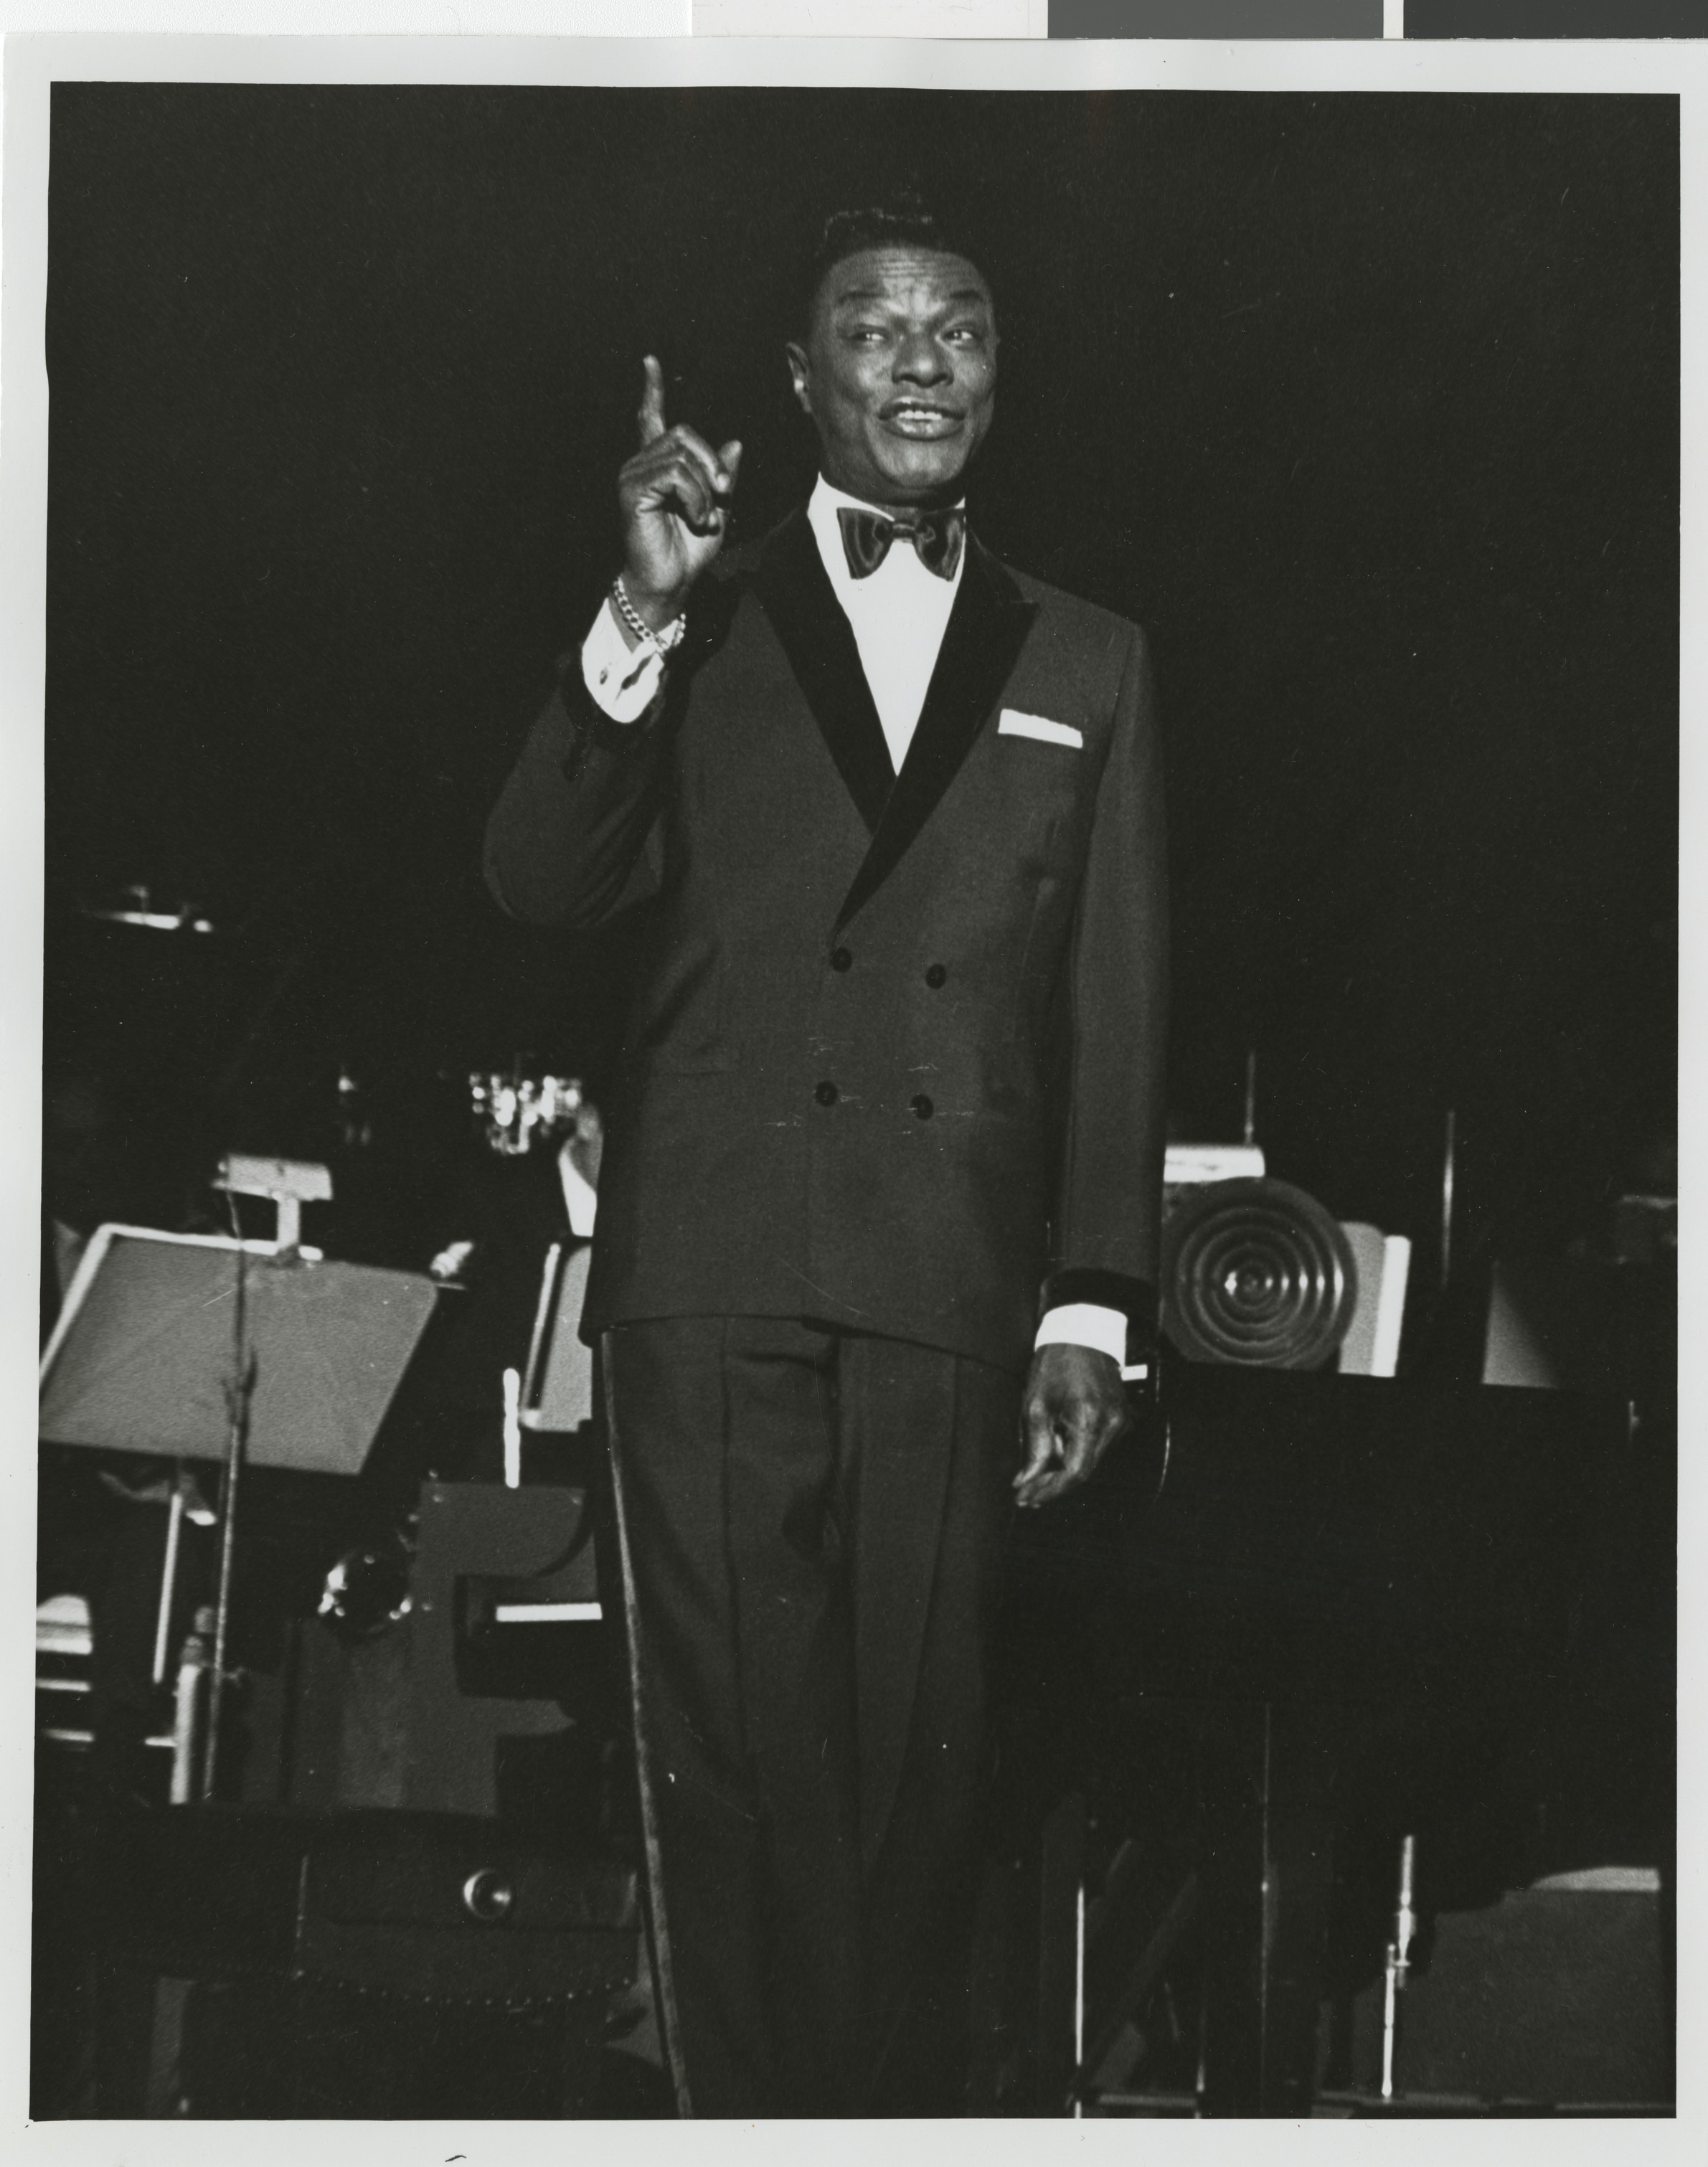 Nat King Cole on stage, Image 01